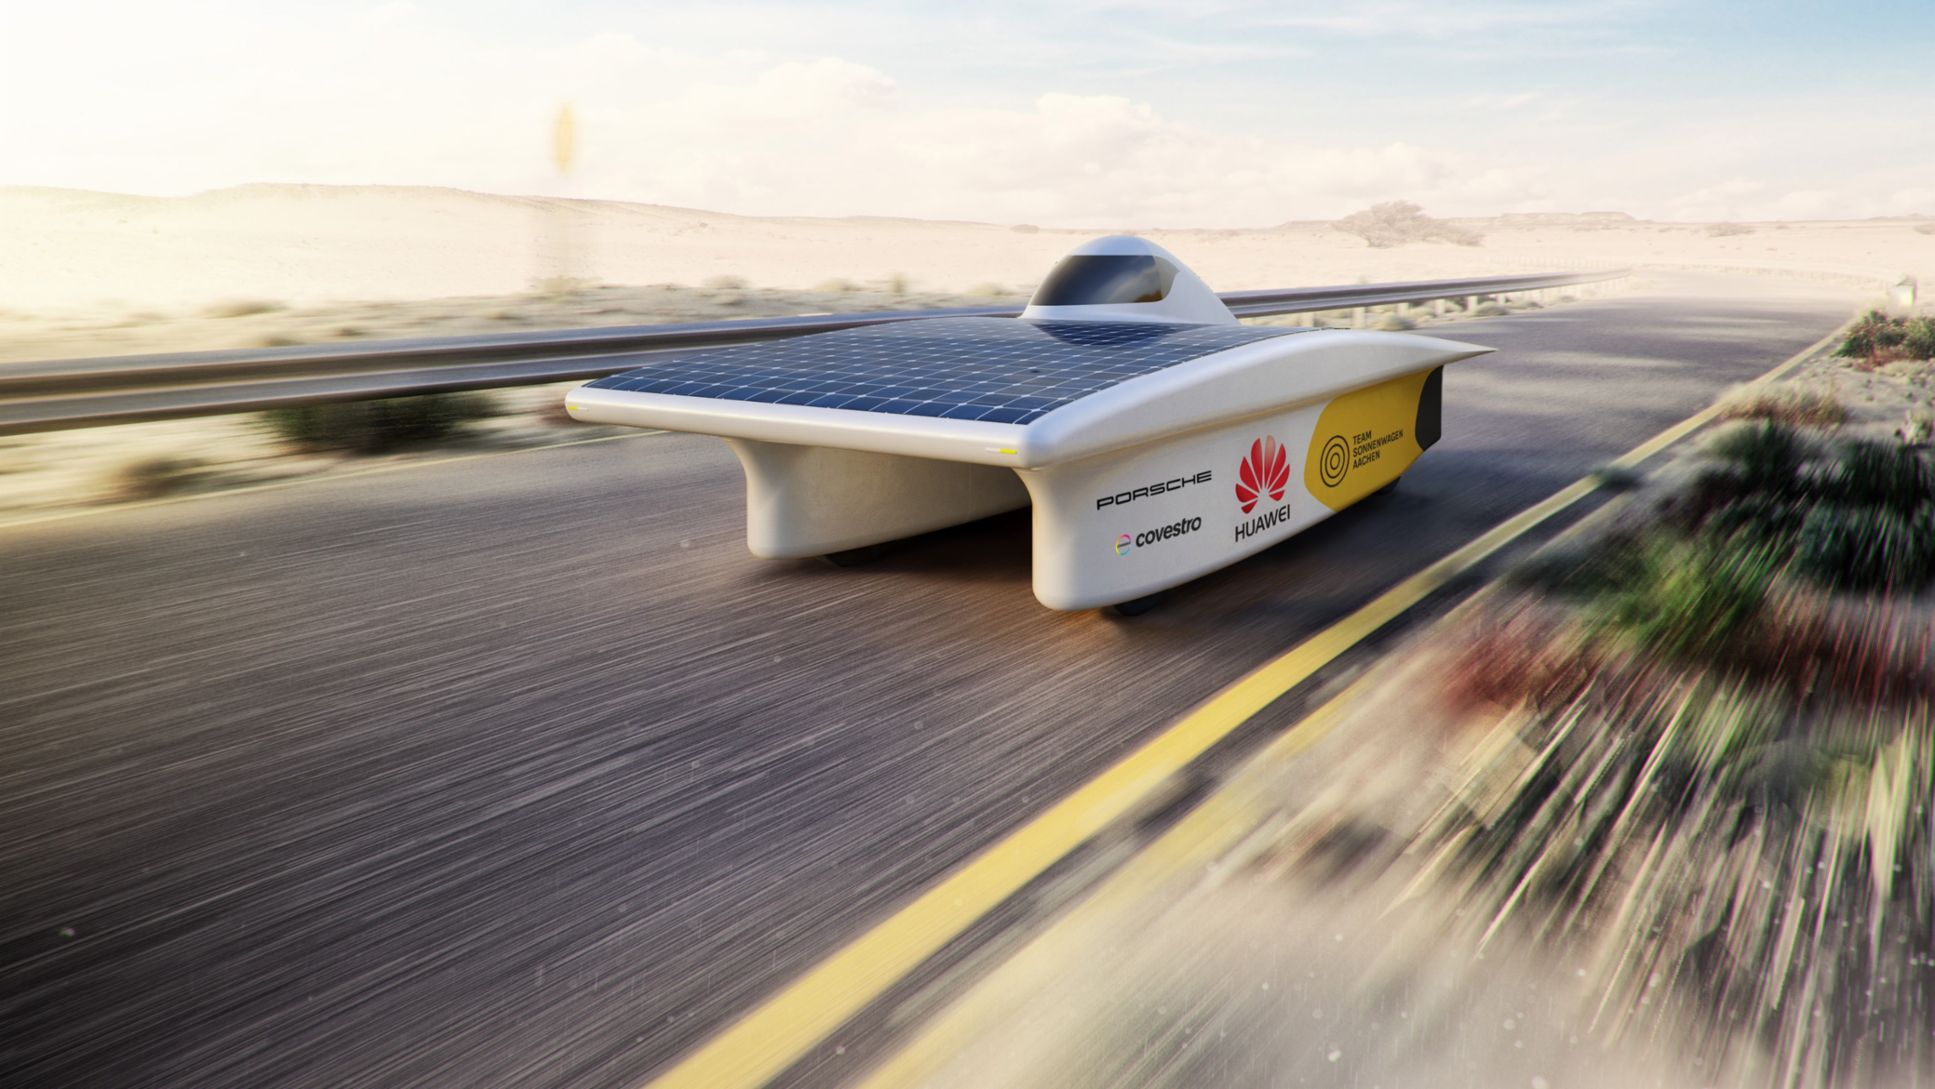 Solar-powerd vehicle, Team Sonnenwagen by RWTH Aachen, 2017, Porsche AG